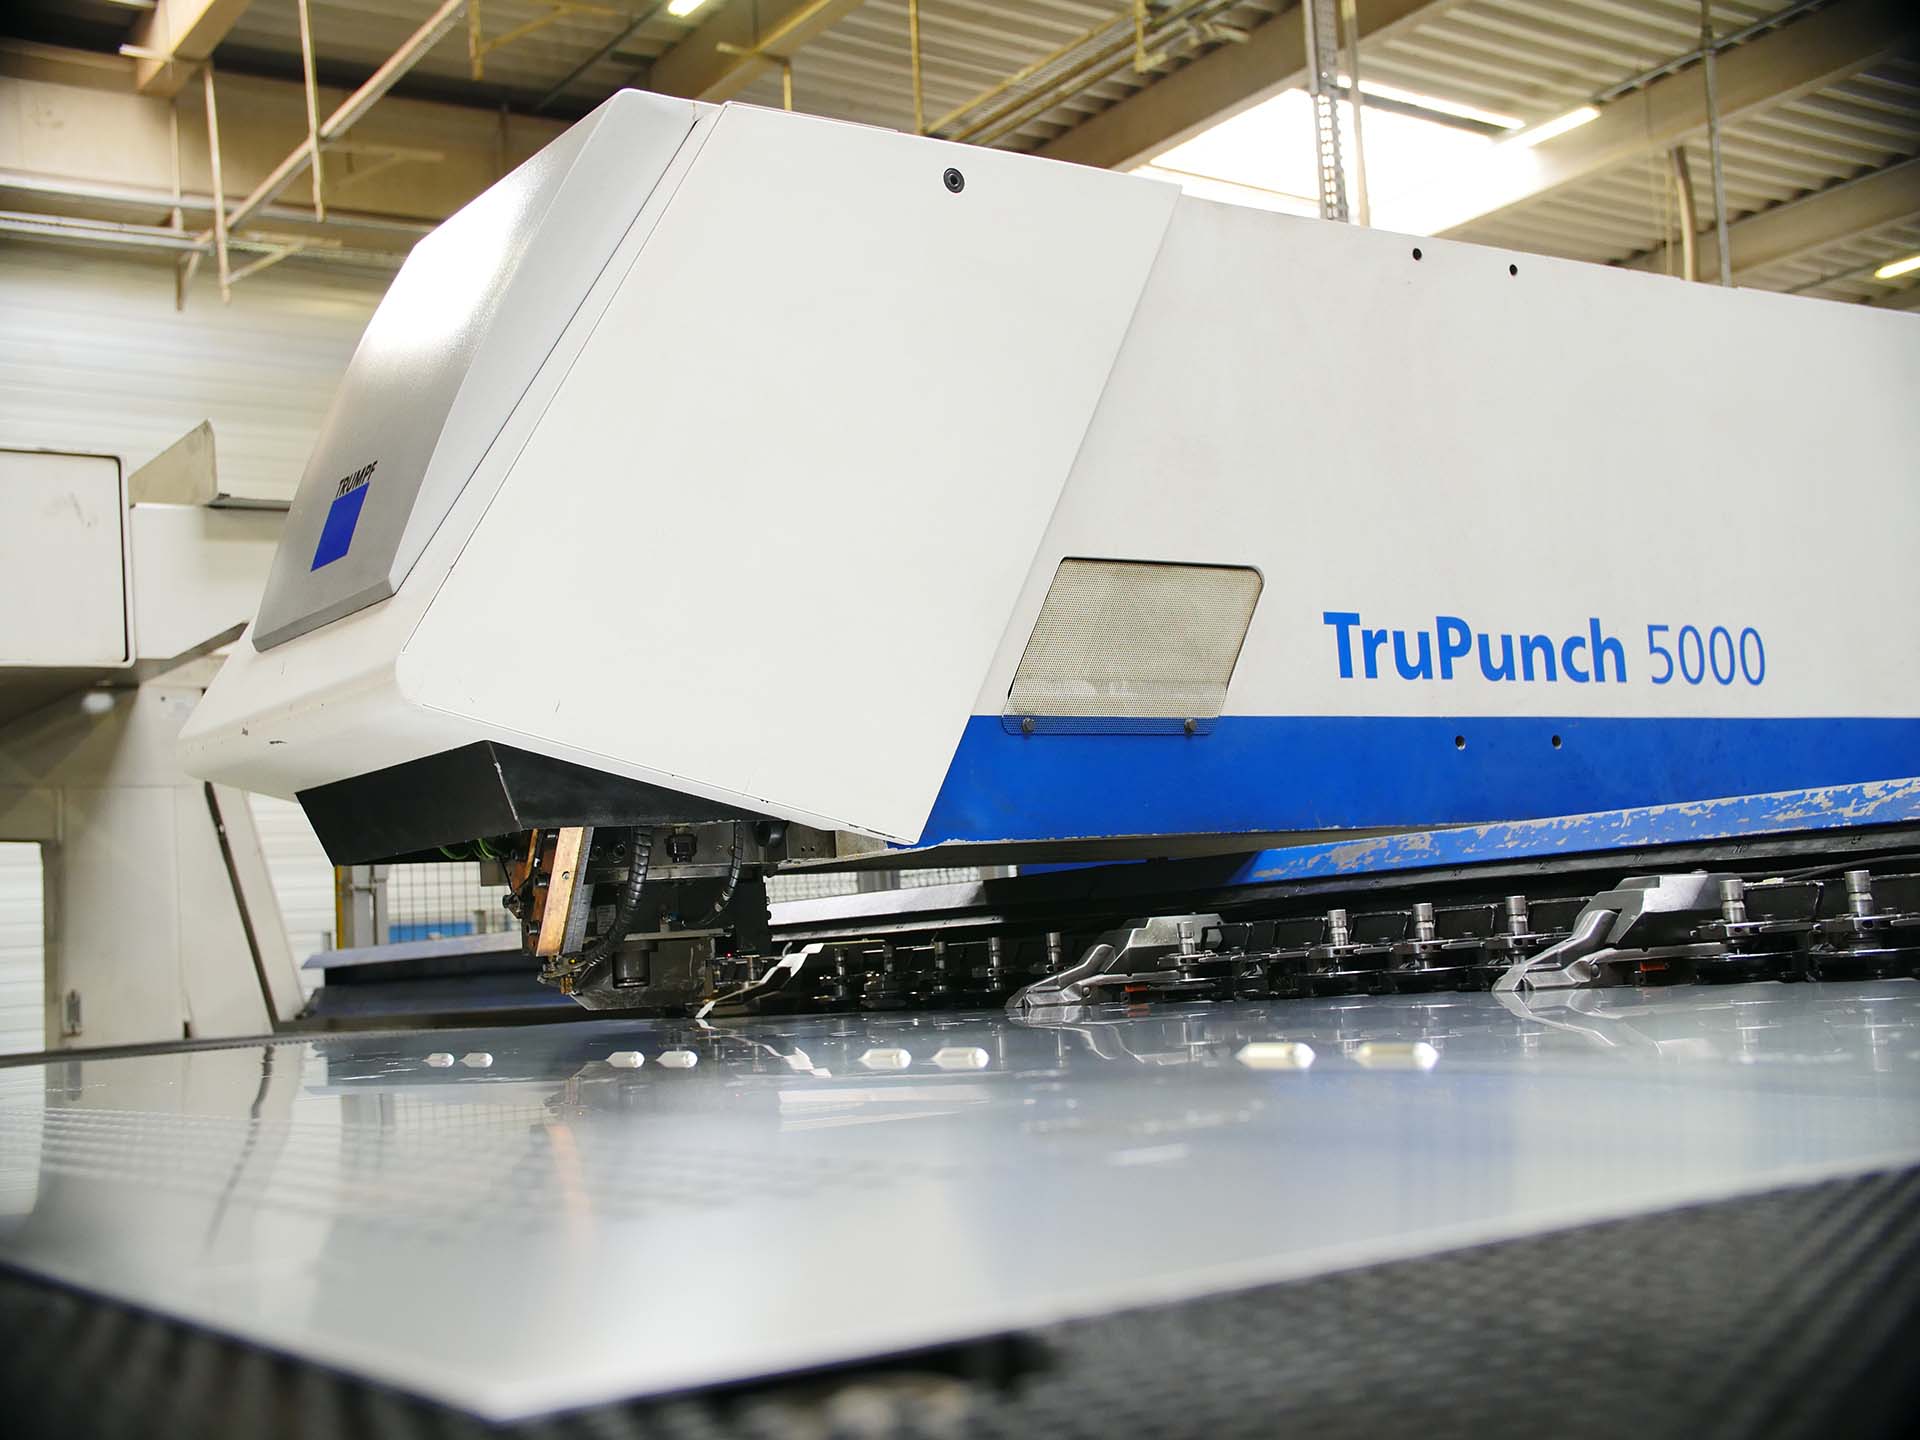 Machine découpe laser chez TGI : Tôlerie Ganaye Industrie